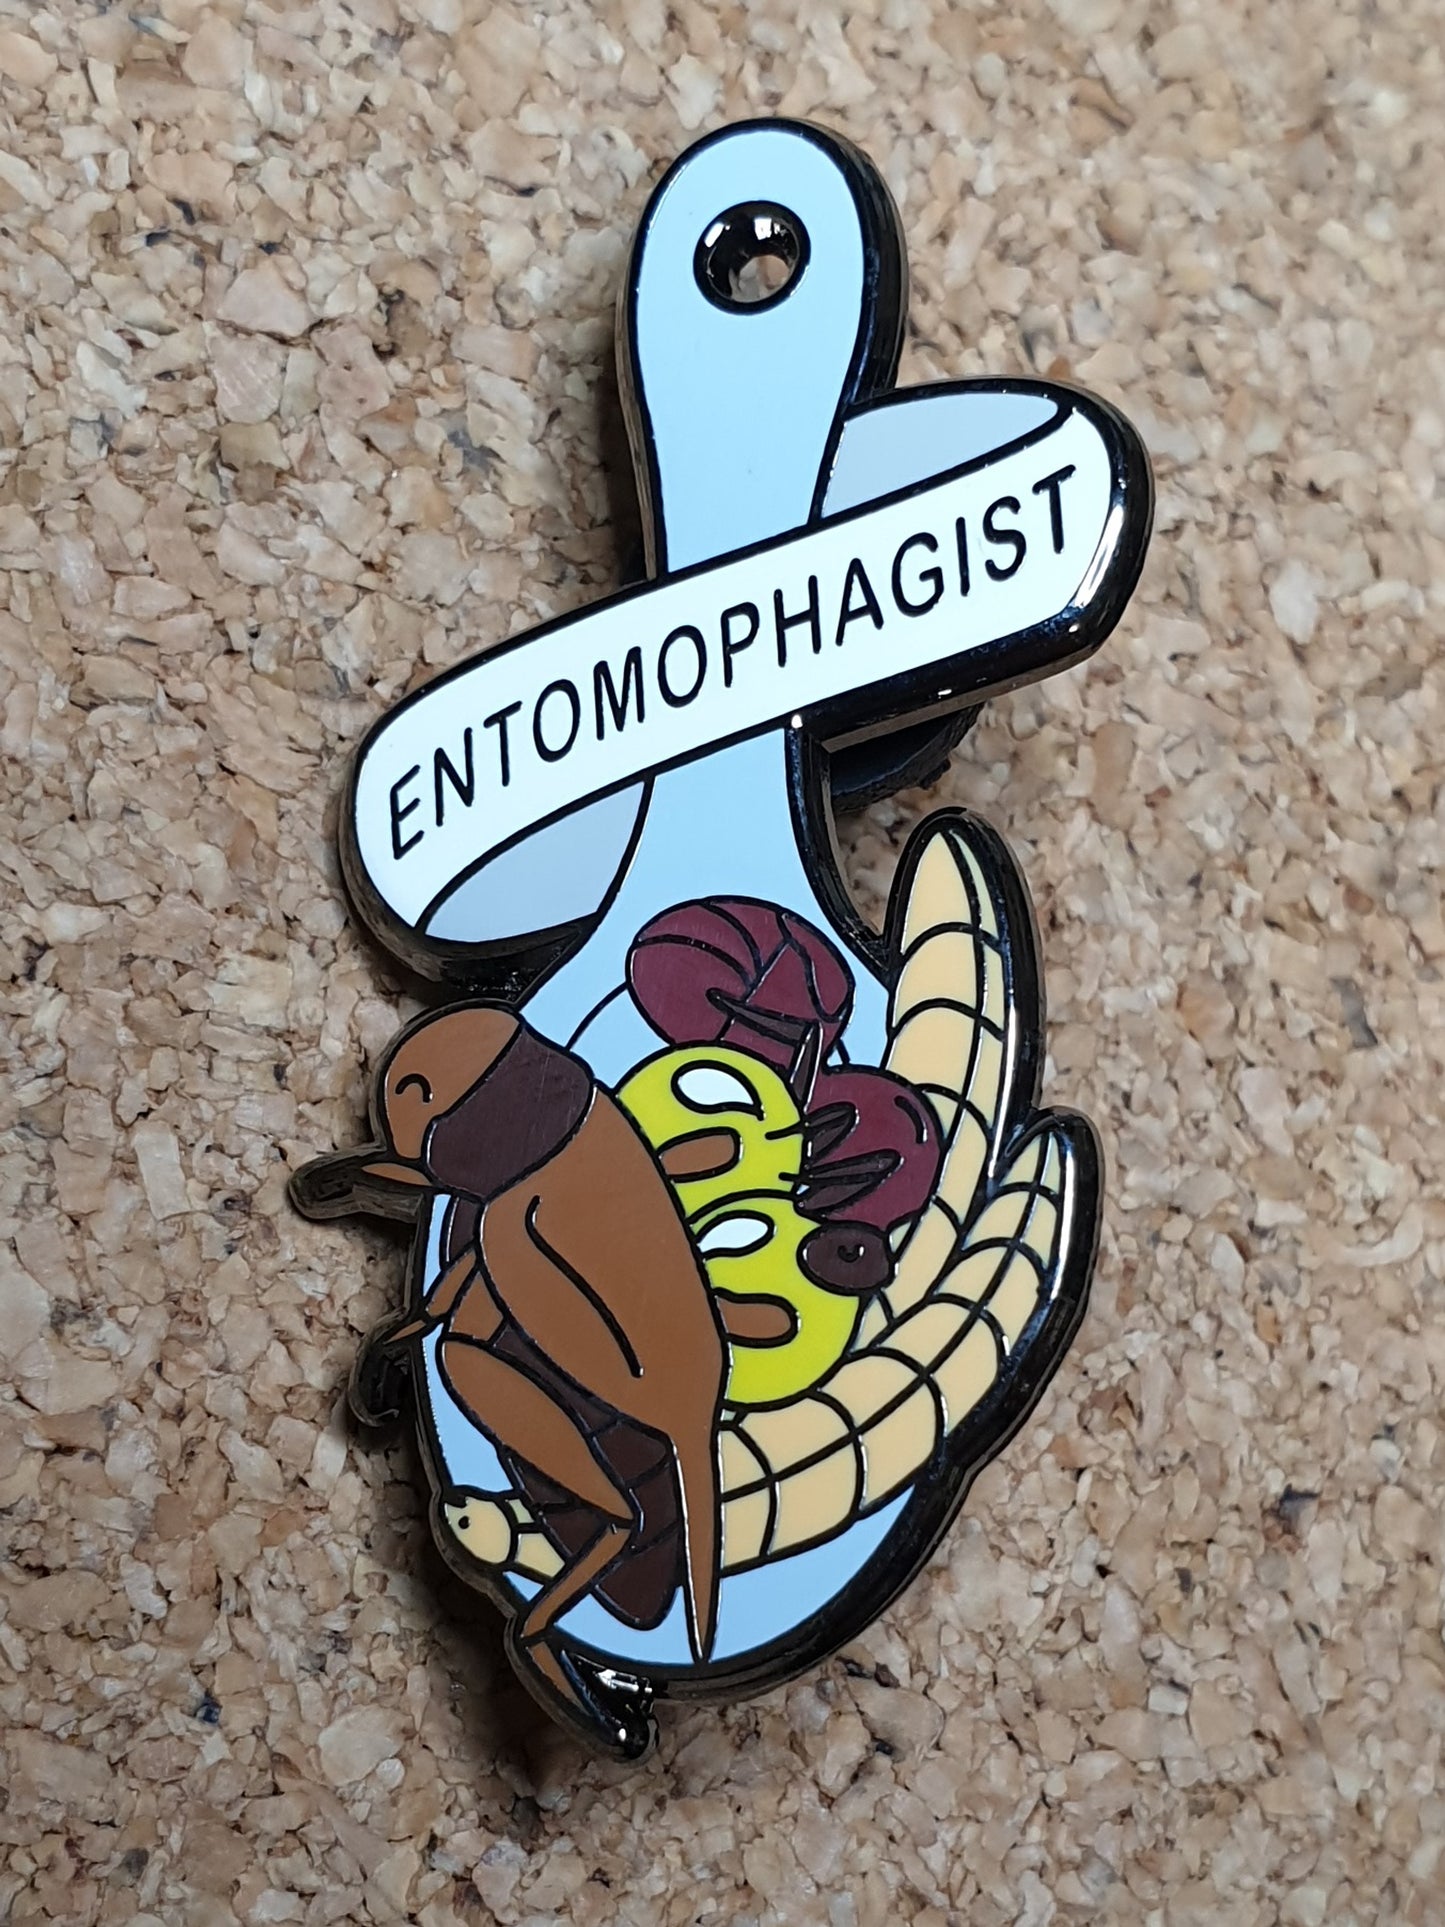 Entomophagist pin